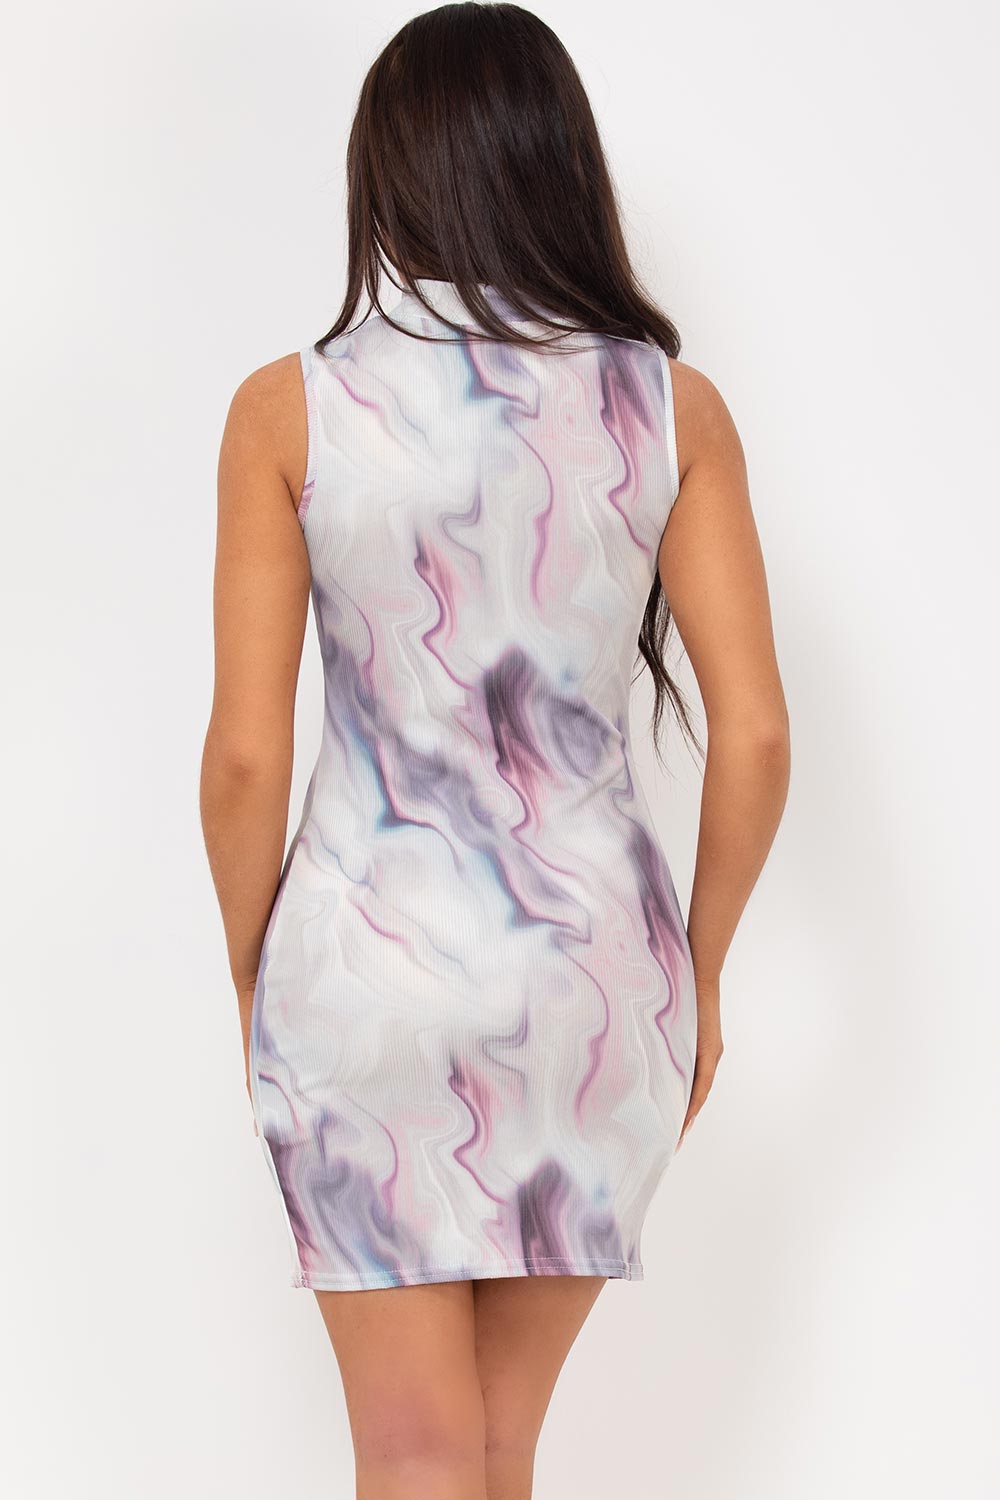 marble print sleeveless bodycon dress uk